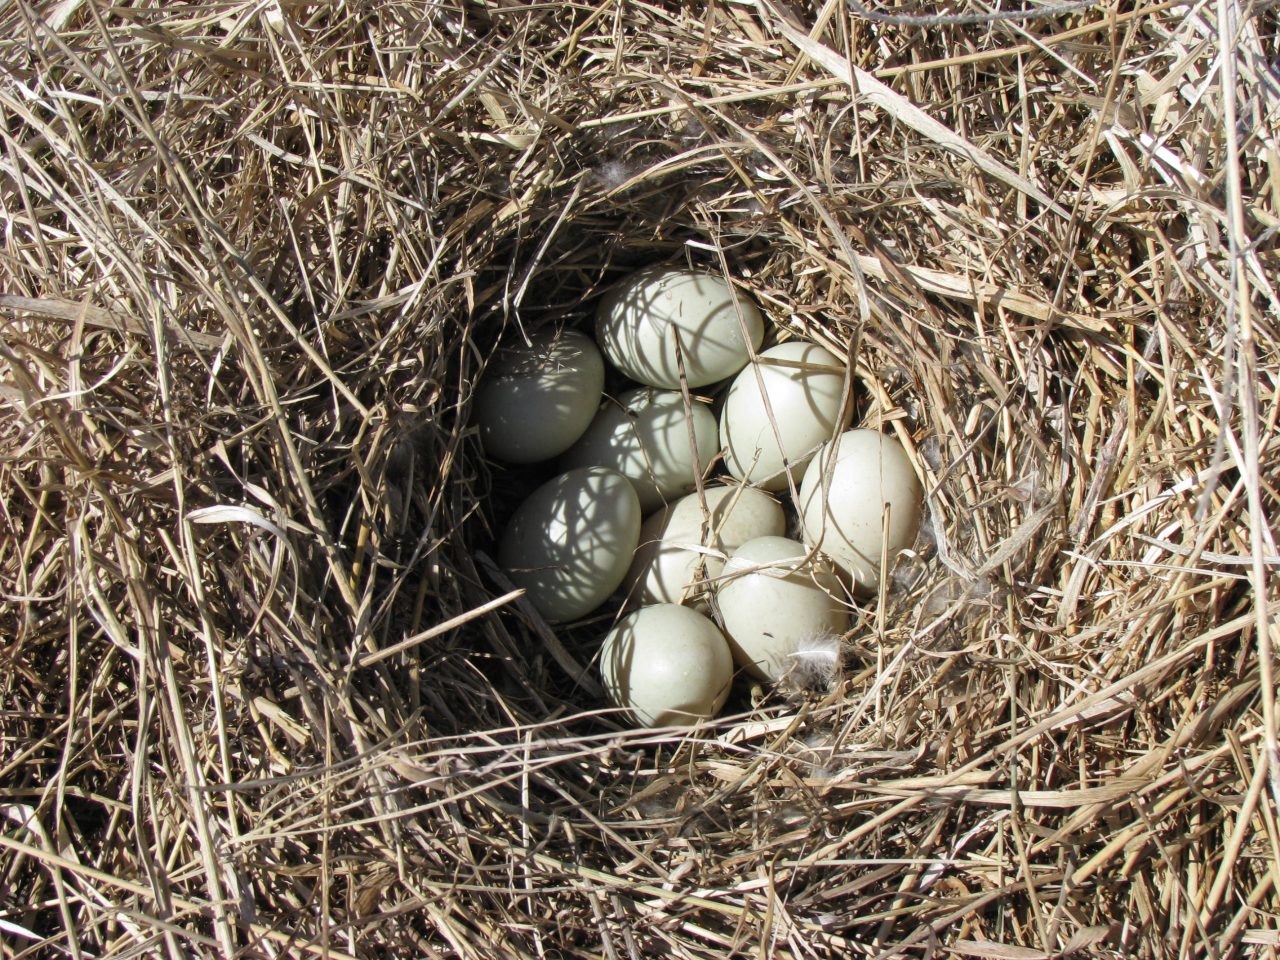 Mallard nest photo by USFWS on Flickr